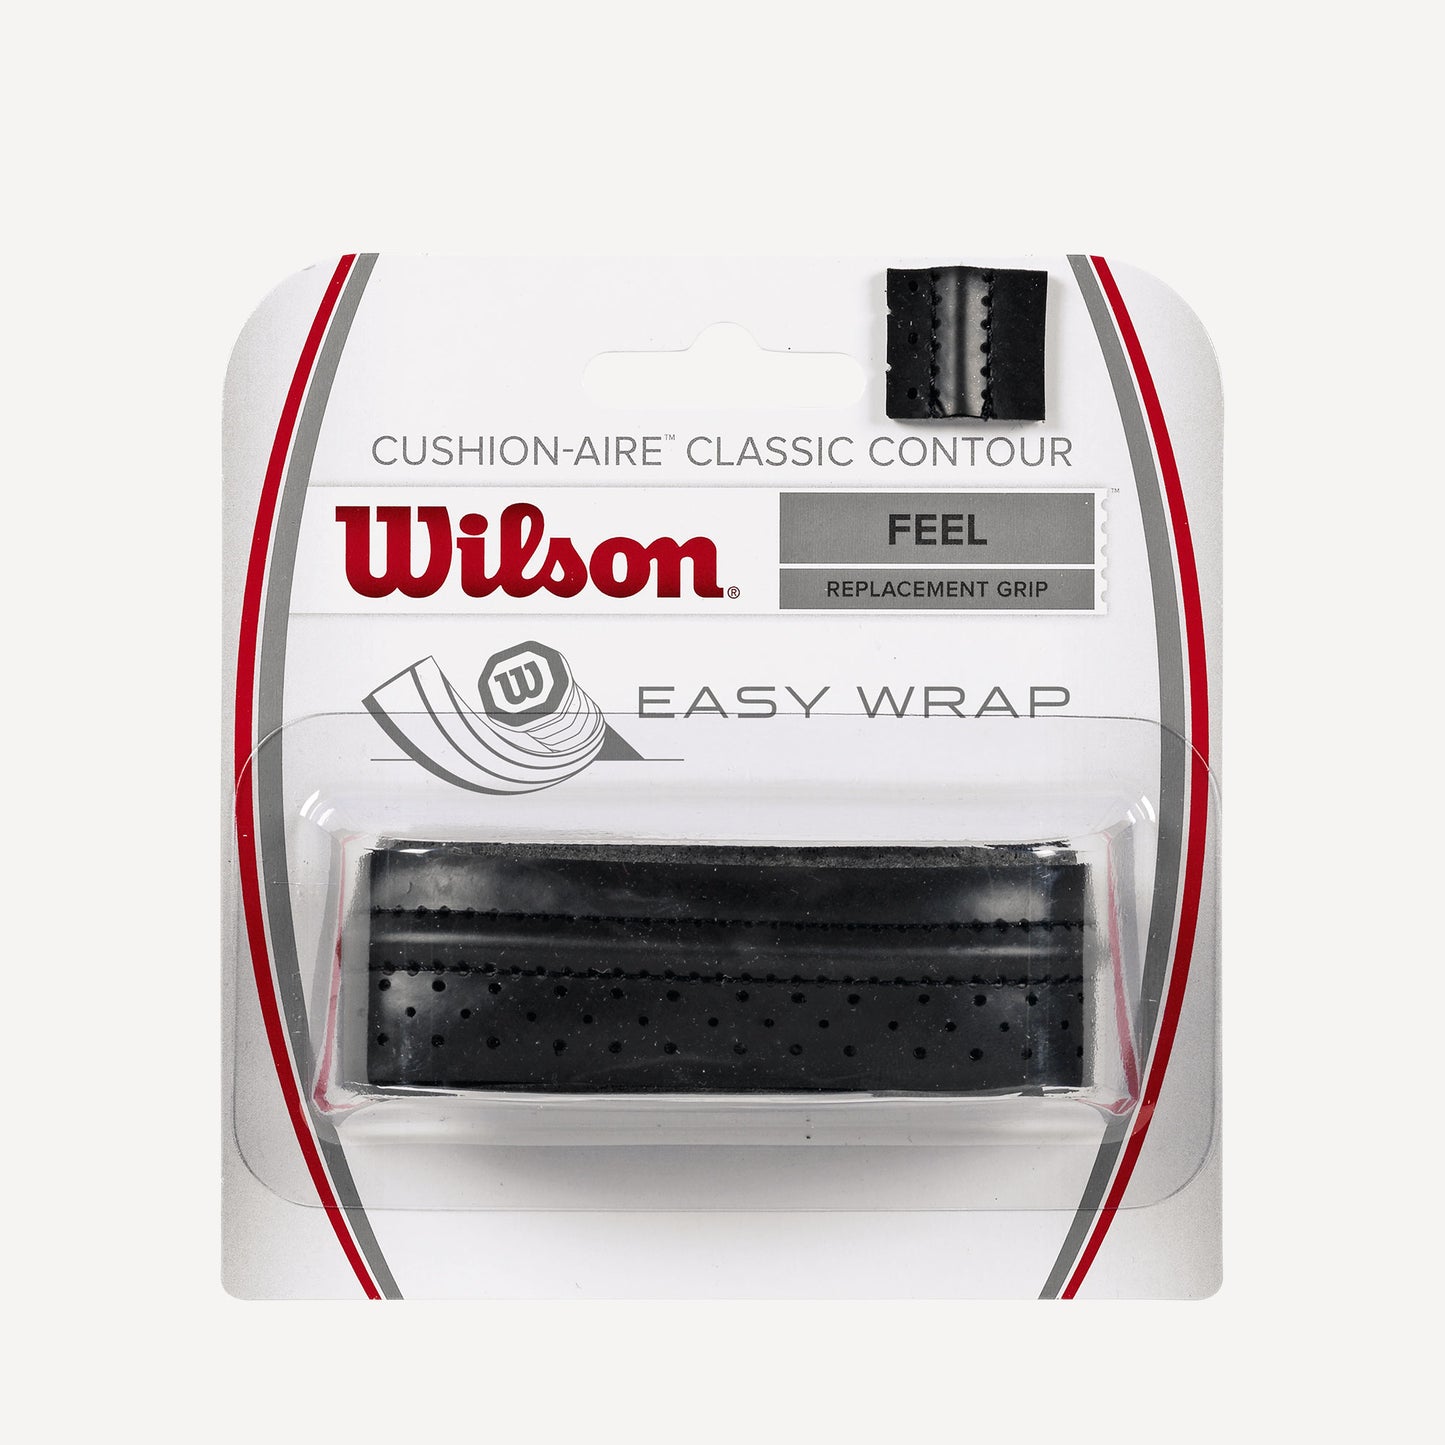 Wilson Cushion-Aire Classic Contour Tennis Replacement Grip 1